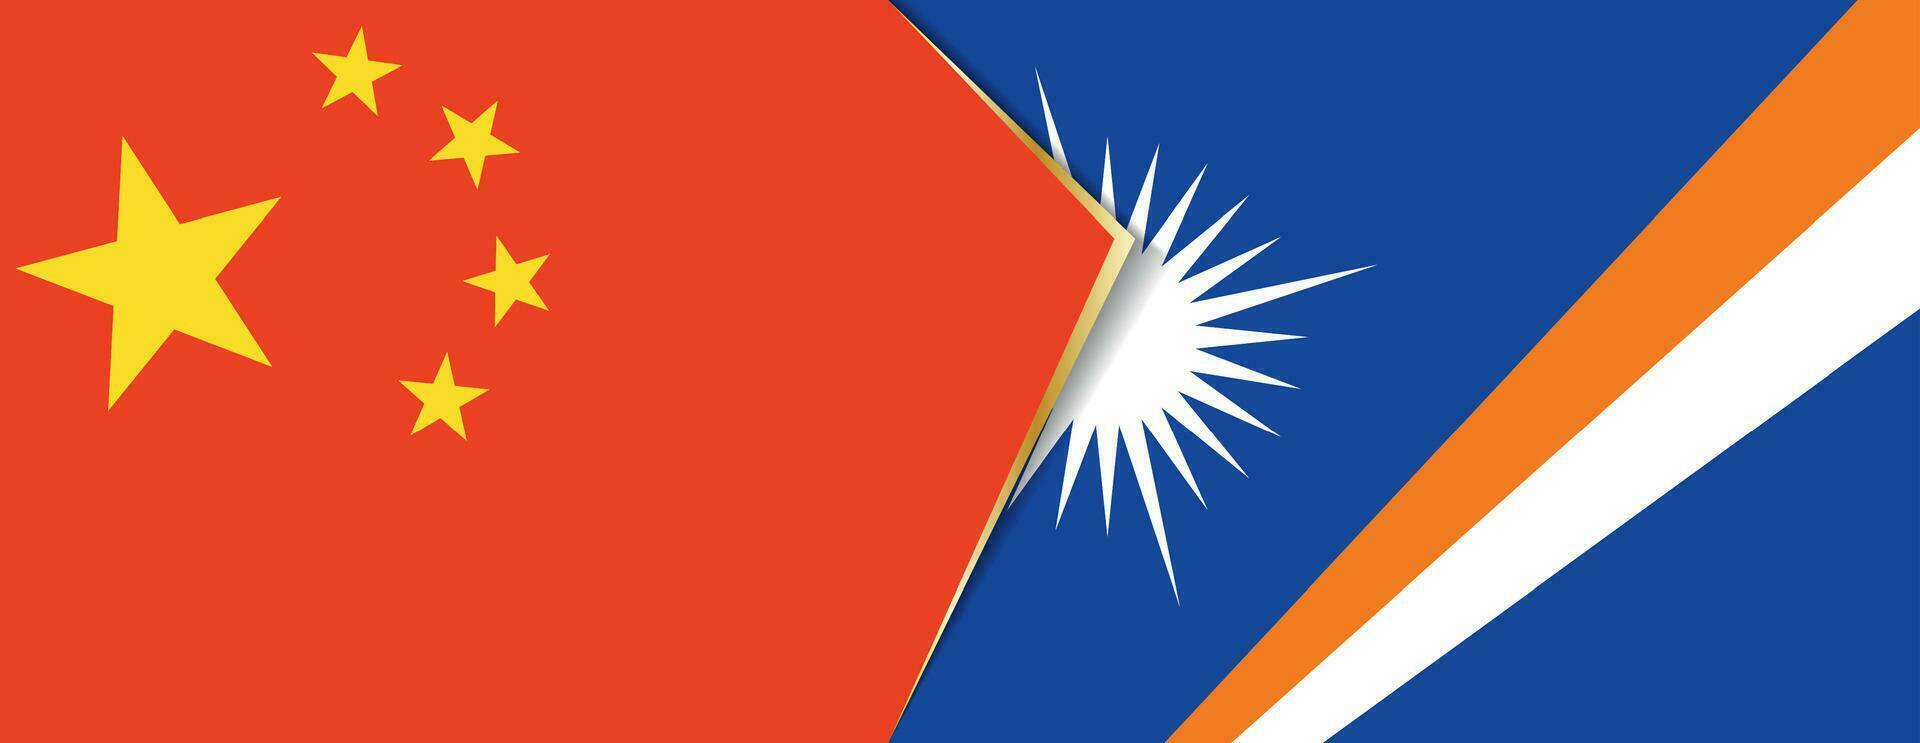 Cina e marshall isole bandiere, Due vettore bandiere.